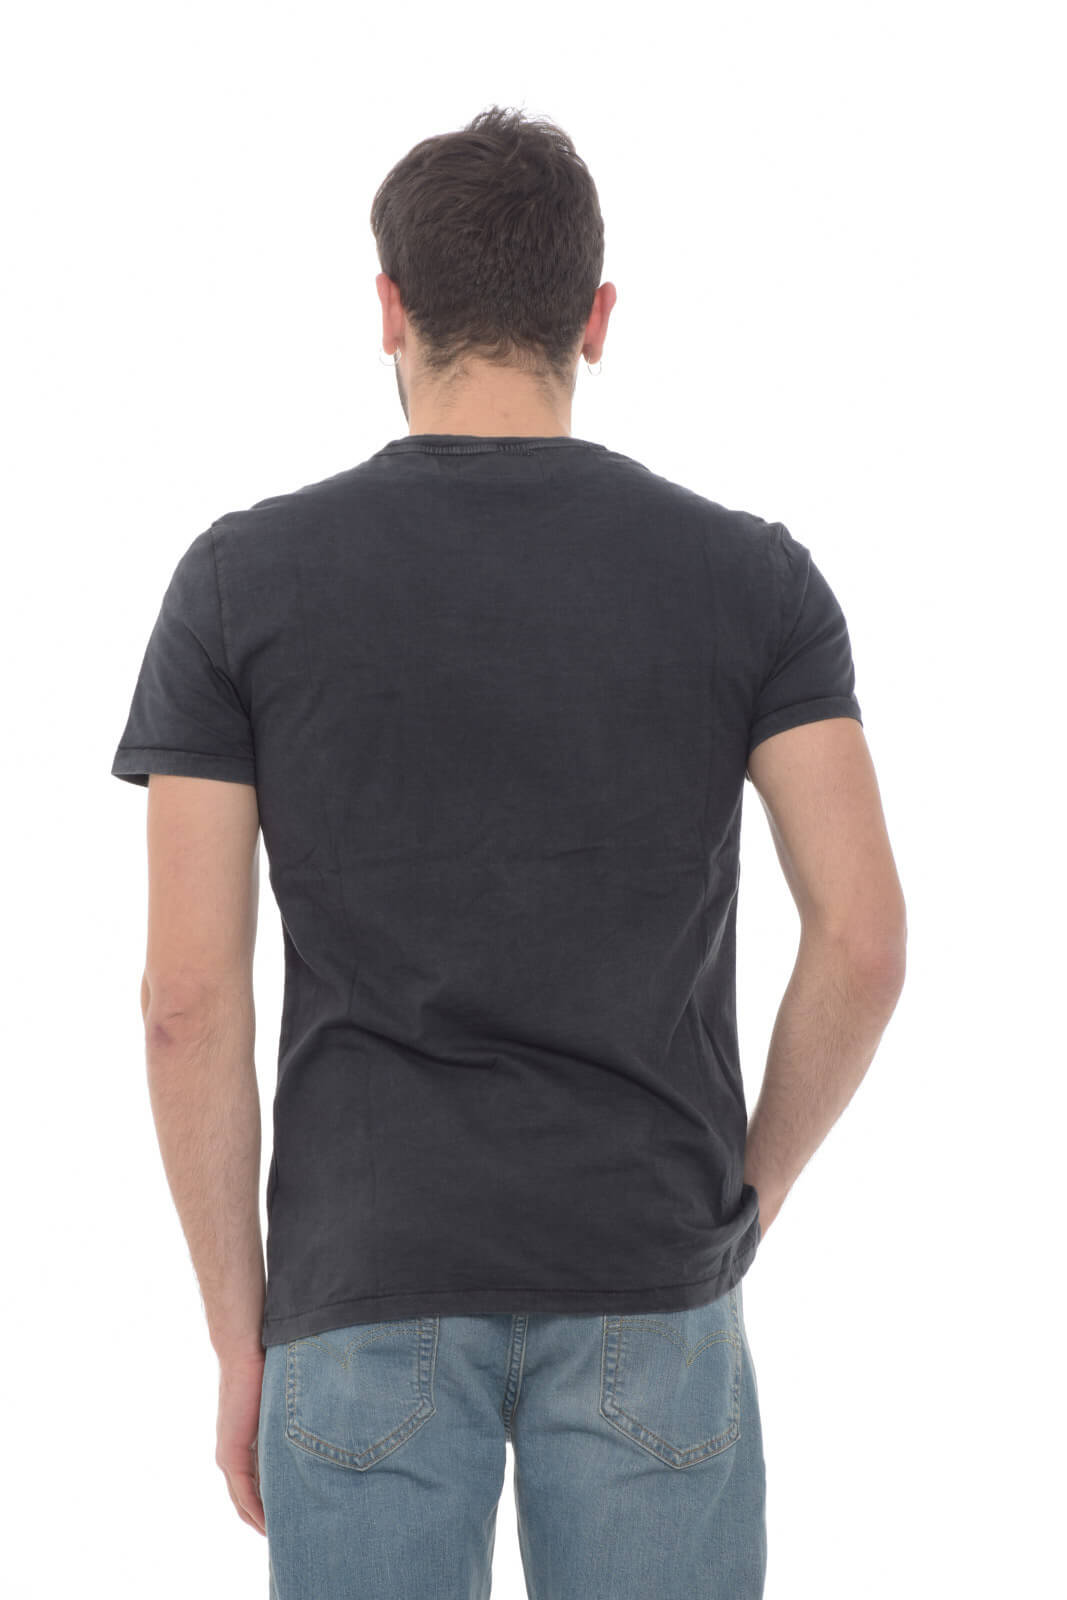 Polo Ralph Lauren Men's T shirt with pocket